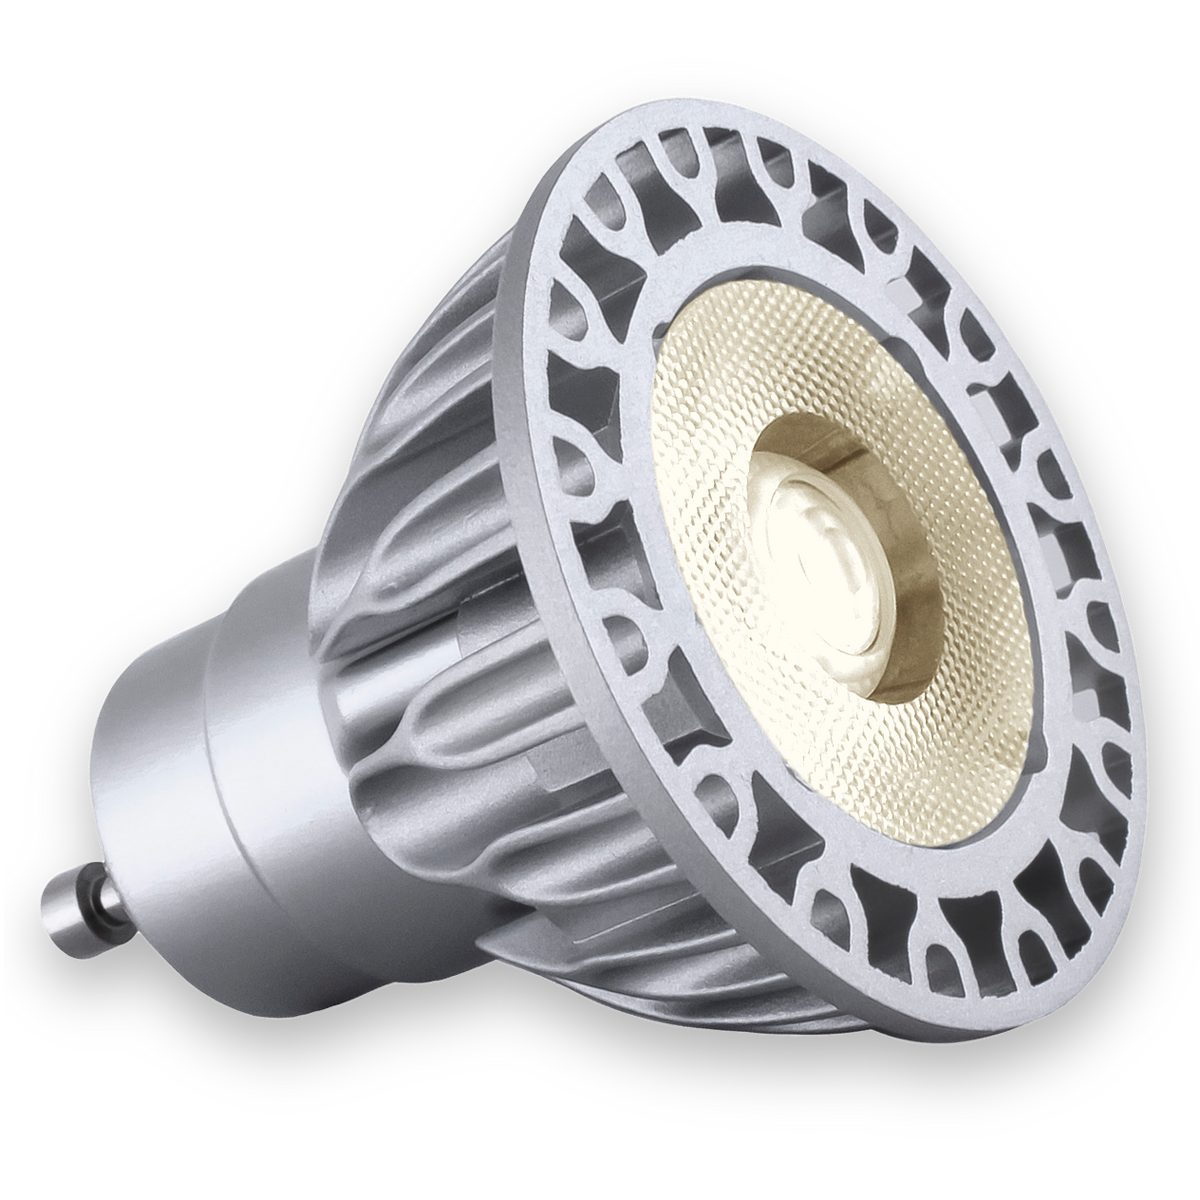 Soraa LED-Leuchtmittel Soraa Vivid 3 MR16 GU10 - Vollspektrum LED - 9Watt, 36°, GU10, Vollspektrum LED mit CRI 95 R9 - dimmbar